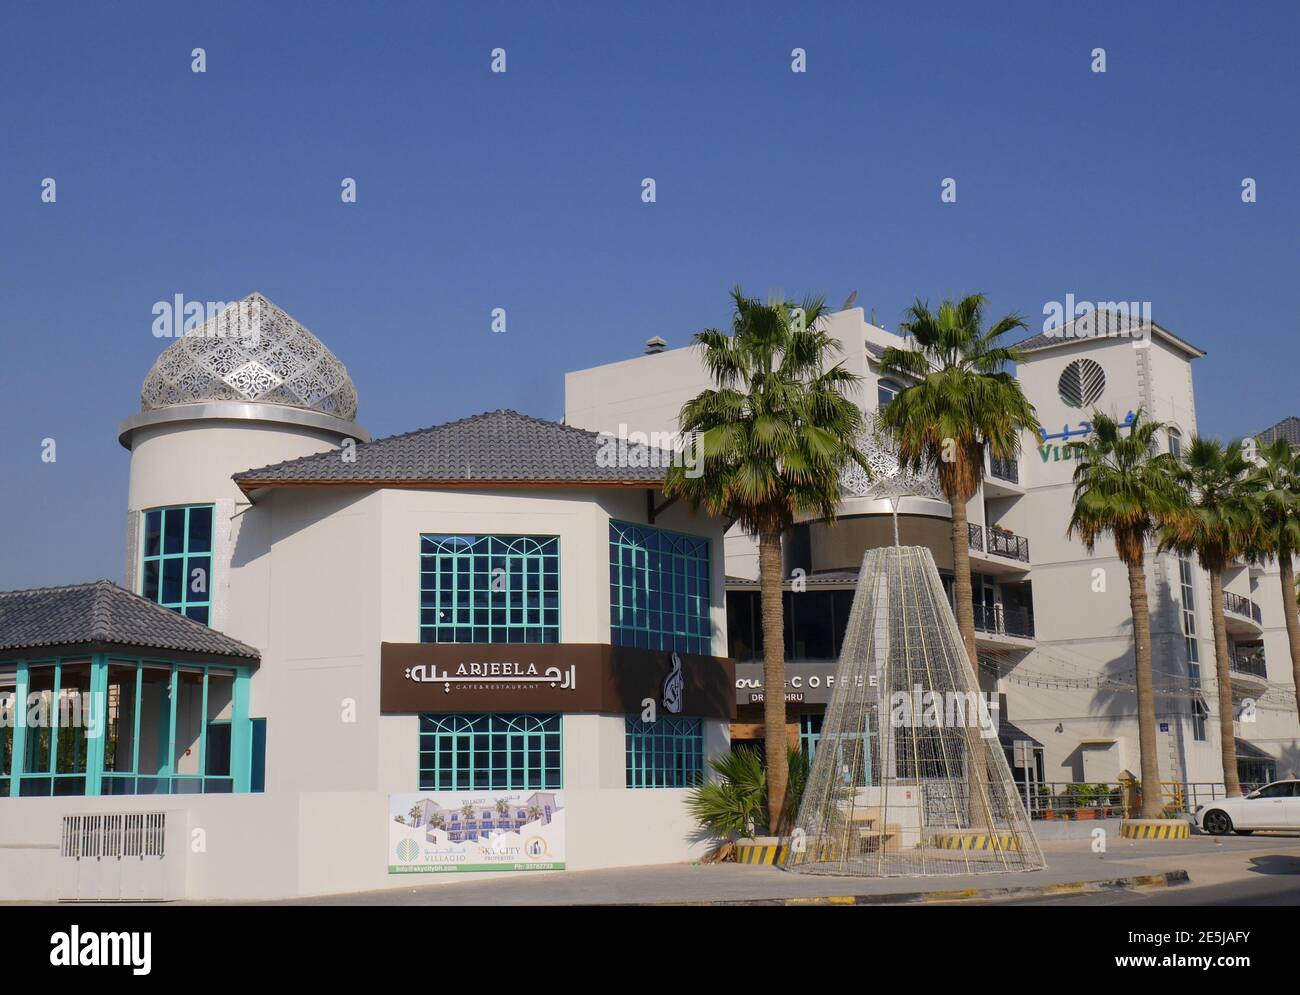 Villagio Mall, Janabiyah, Saar, Kingdom of Bahrain Stock Photo